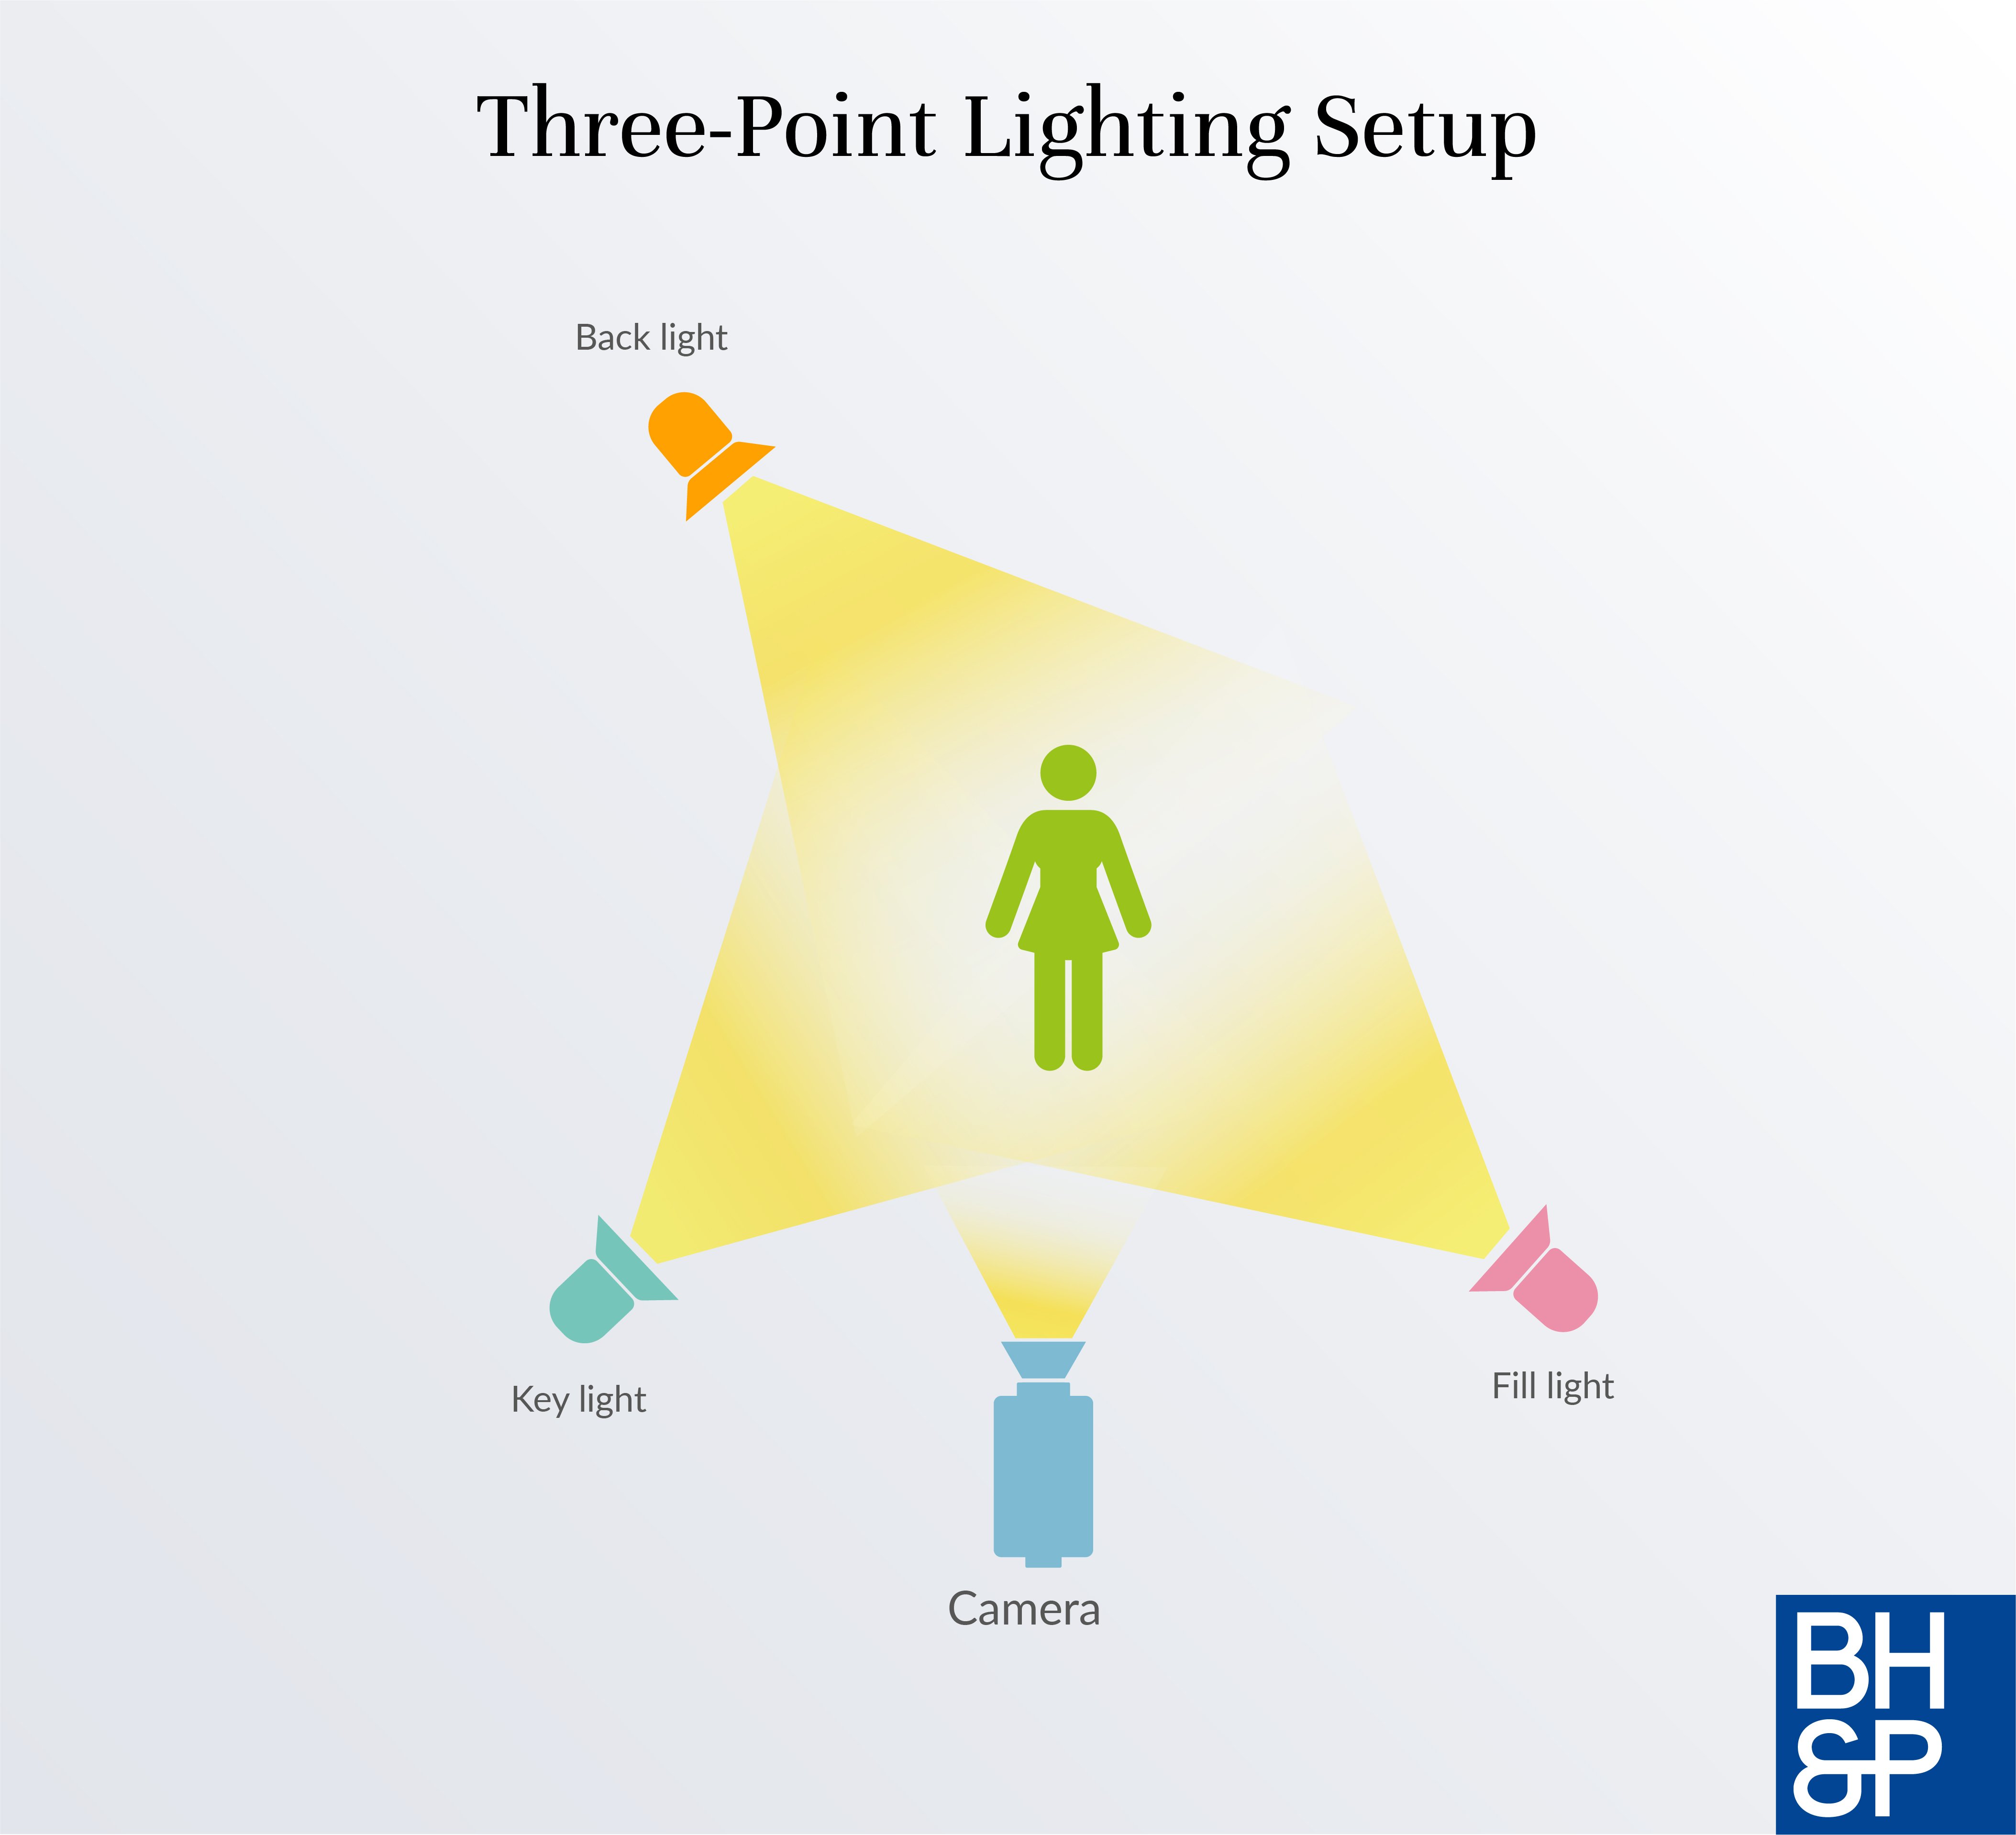 BH&P_Three Point Lighting